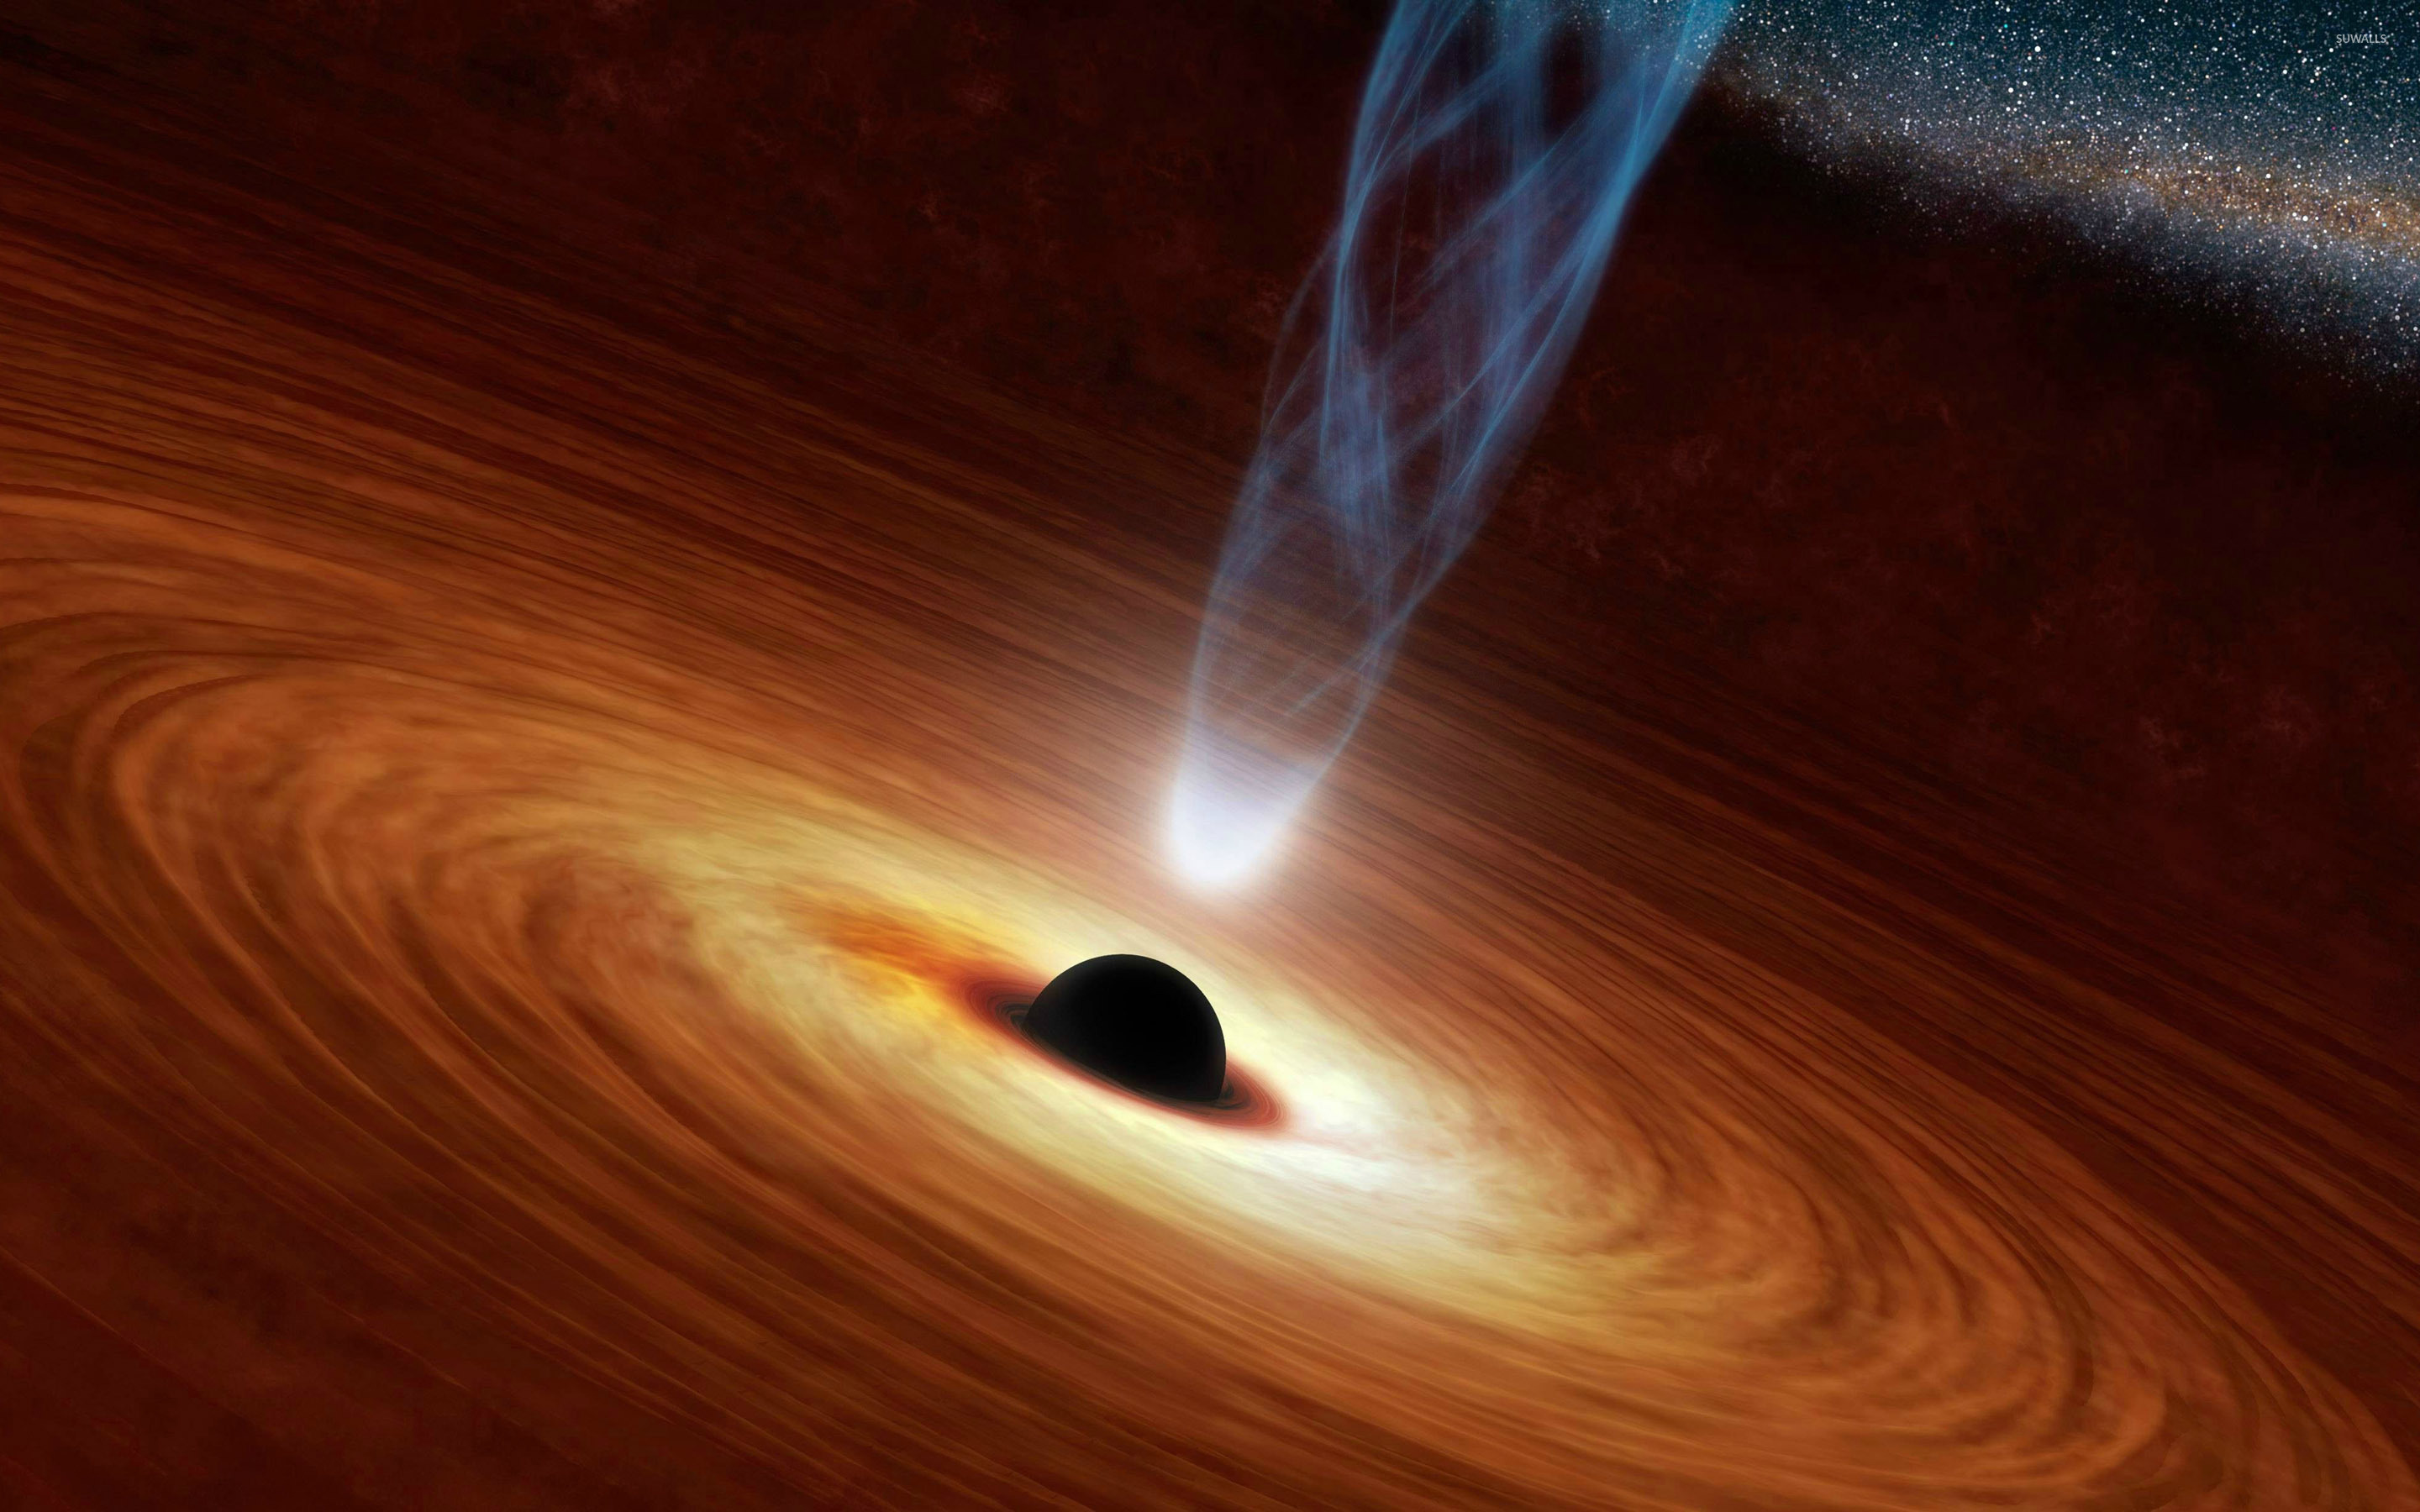 space black hole